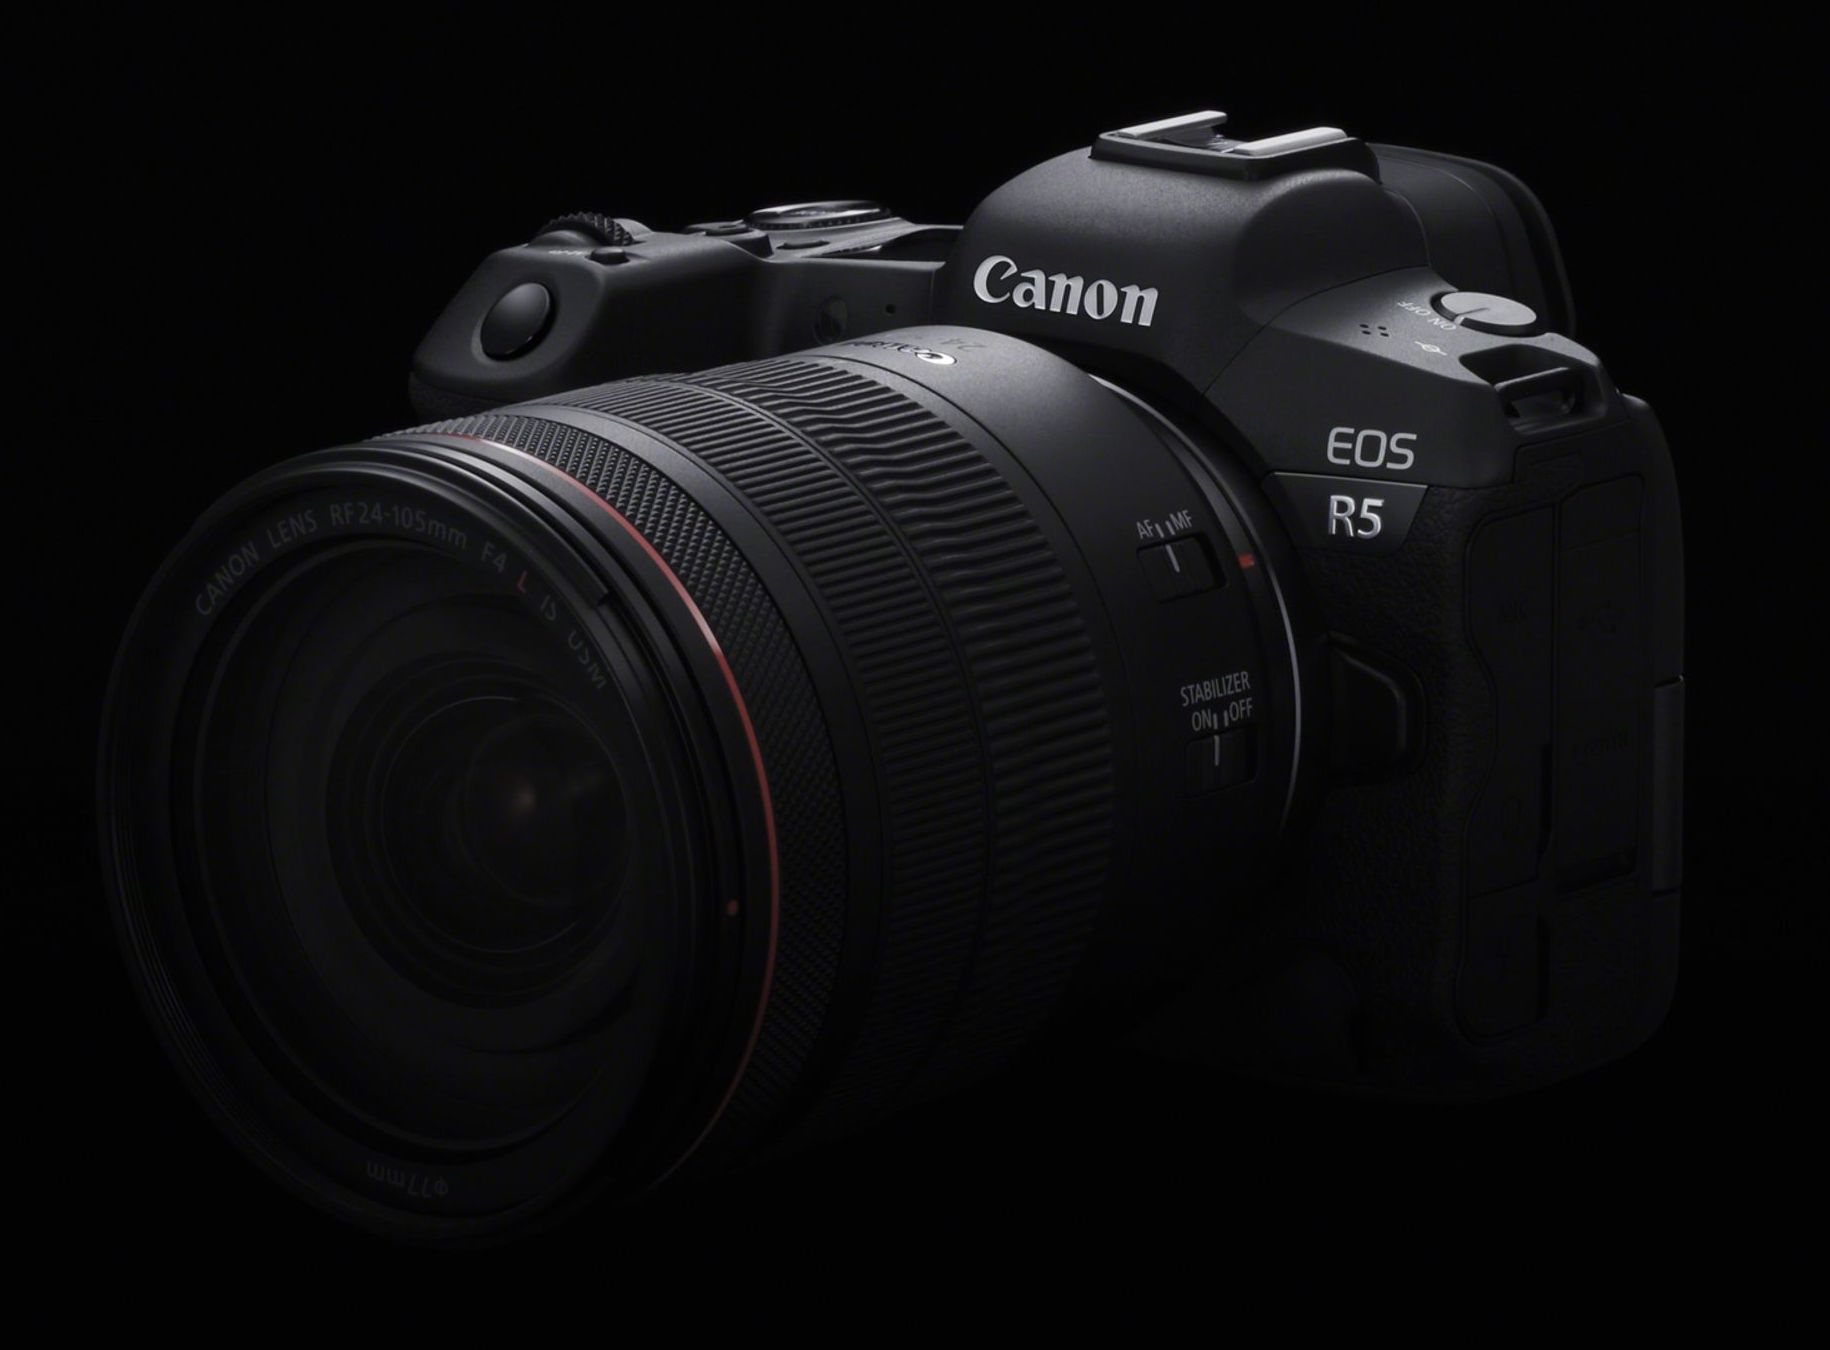 canon-eos-r5-mirrorless-camera-price-4-338-photo-rumors